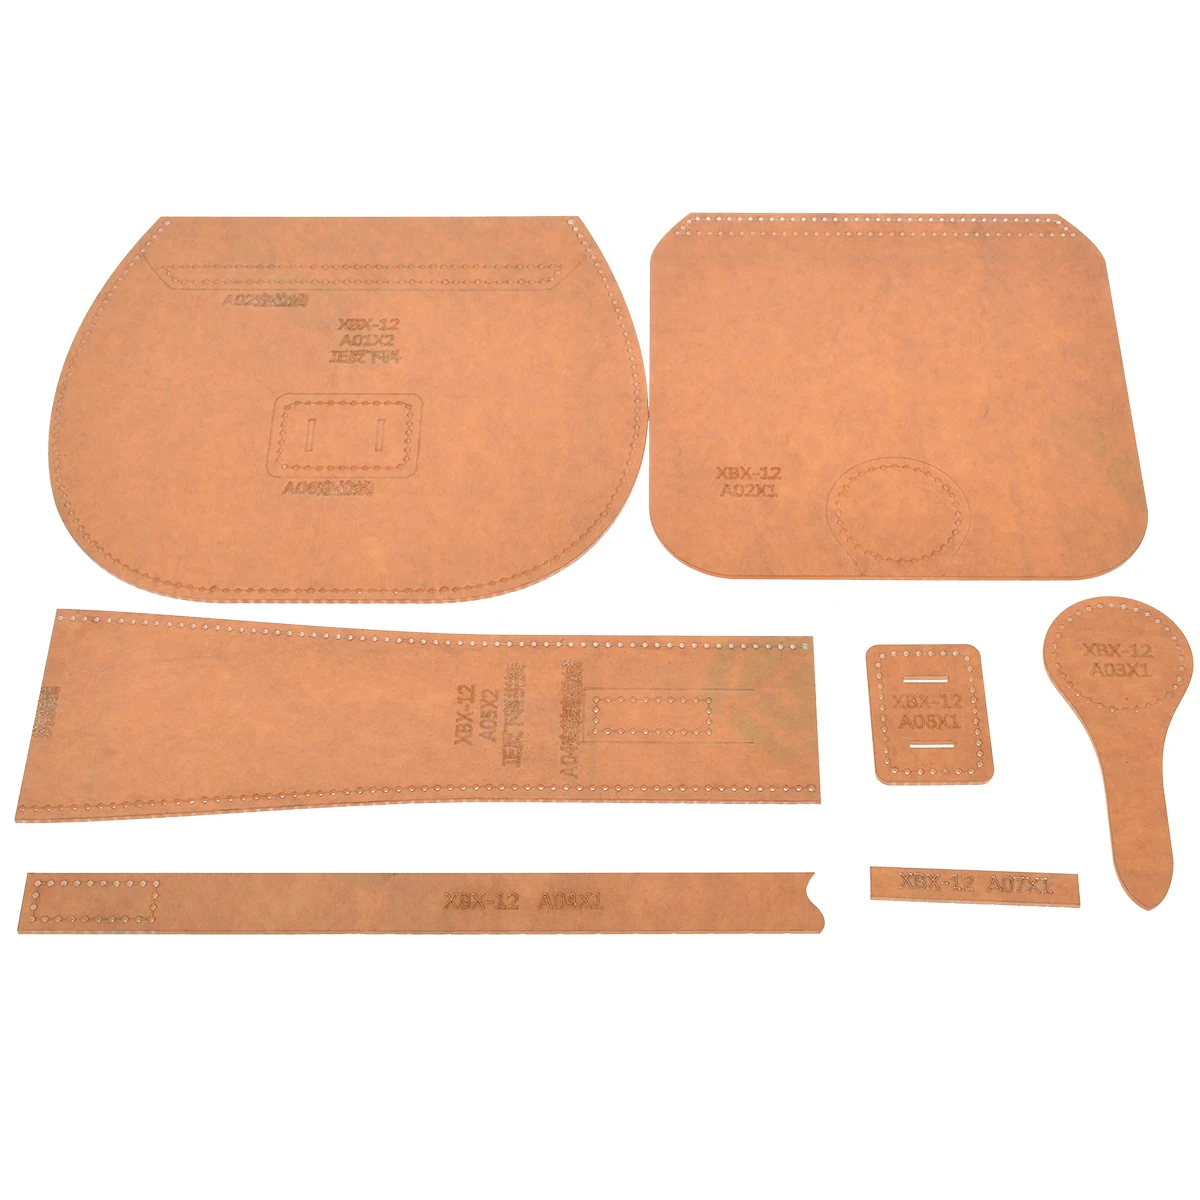 Aliexpress.com : Buy 1 Set Acrylic Template Leather Craft Bag Pattern ...